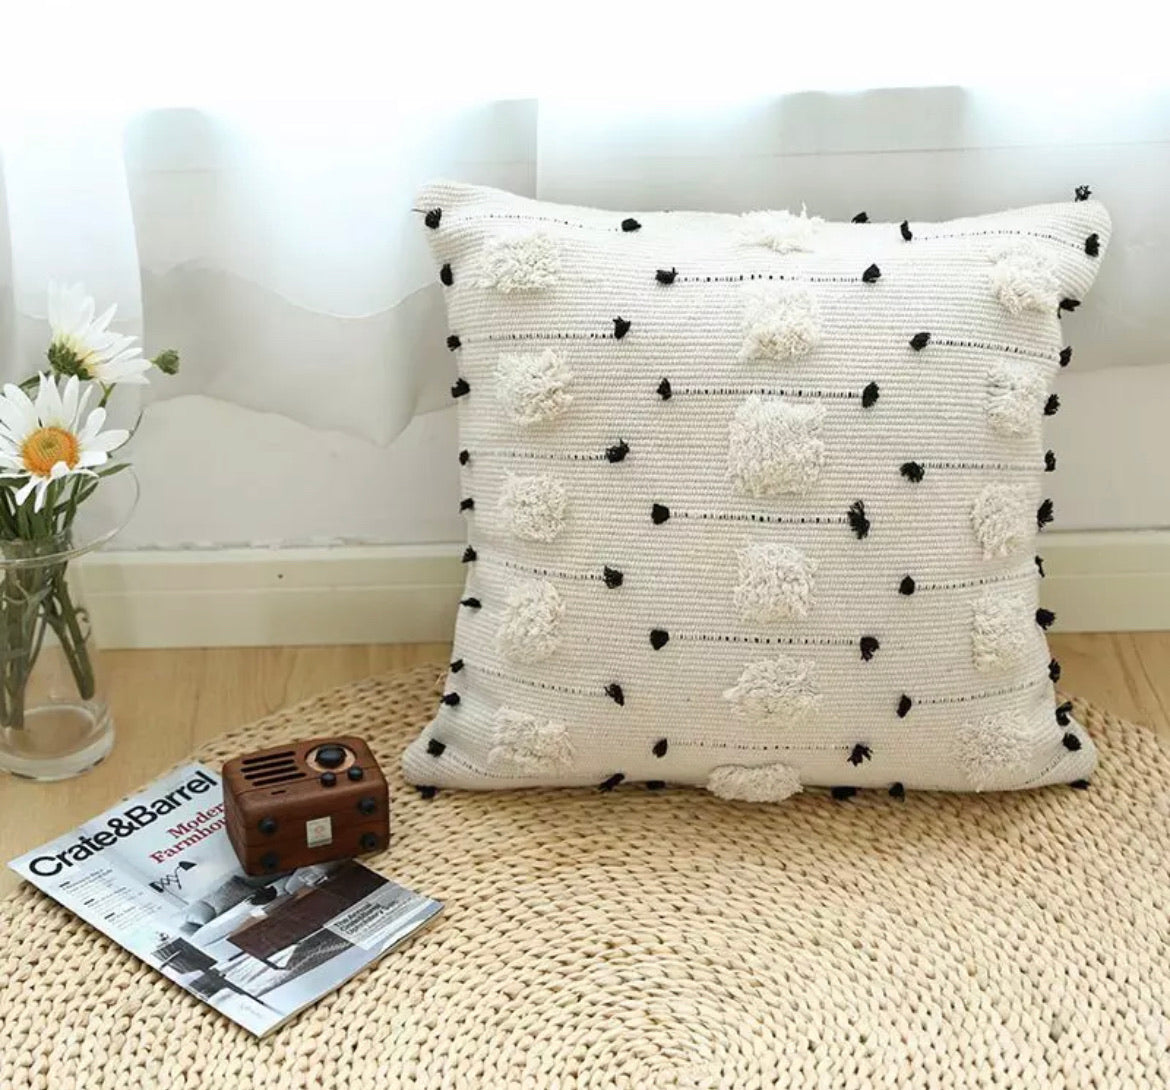 Boho Geometric Black and White Cushion Cover